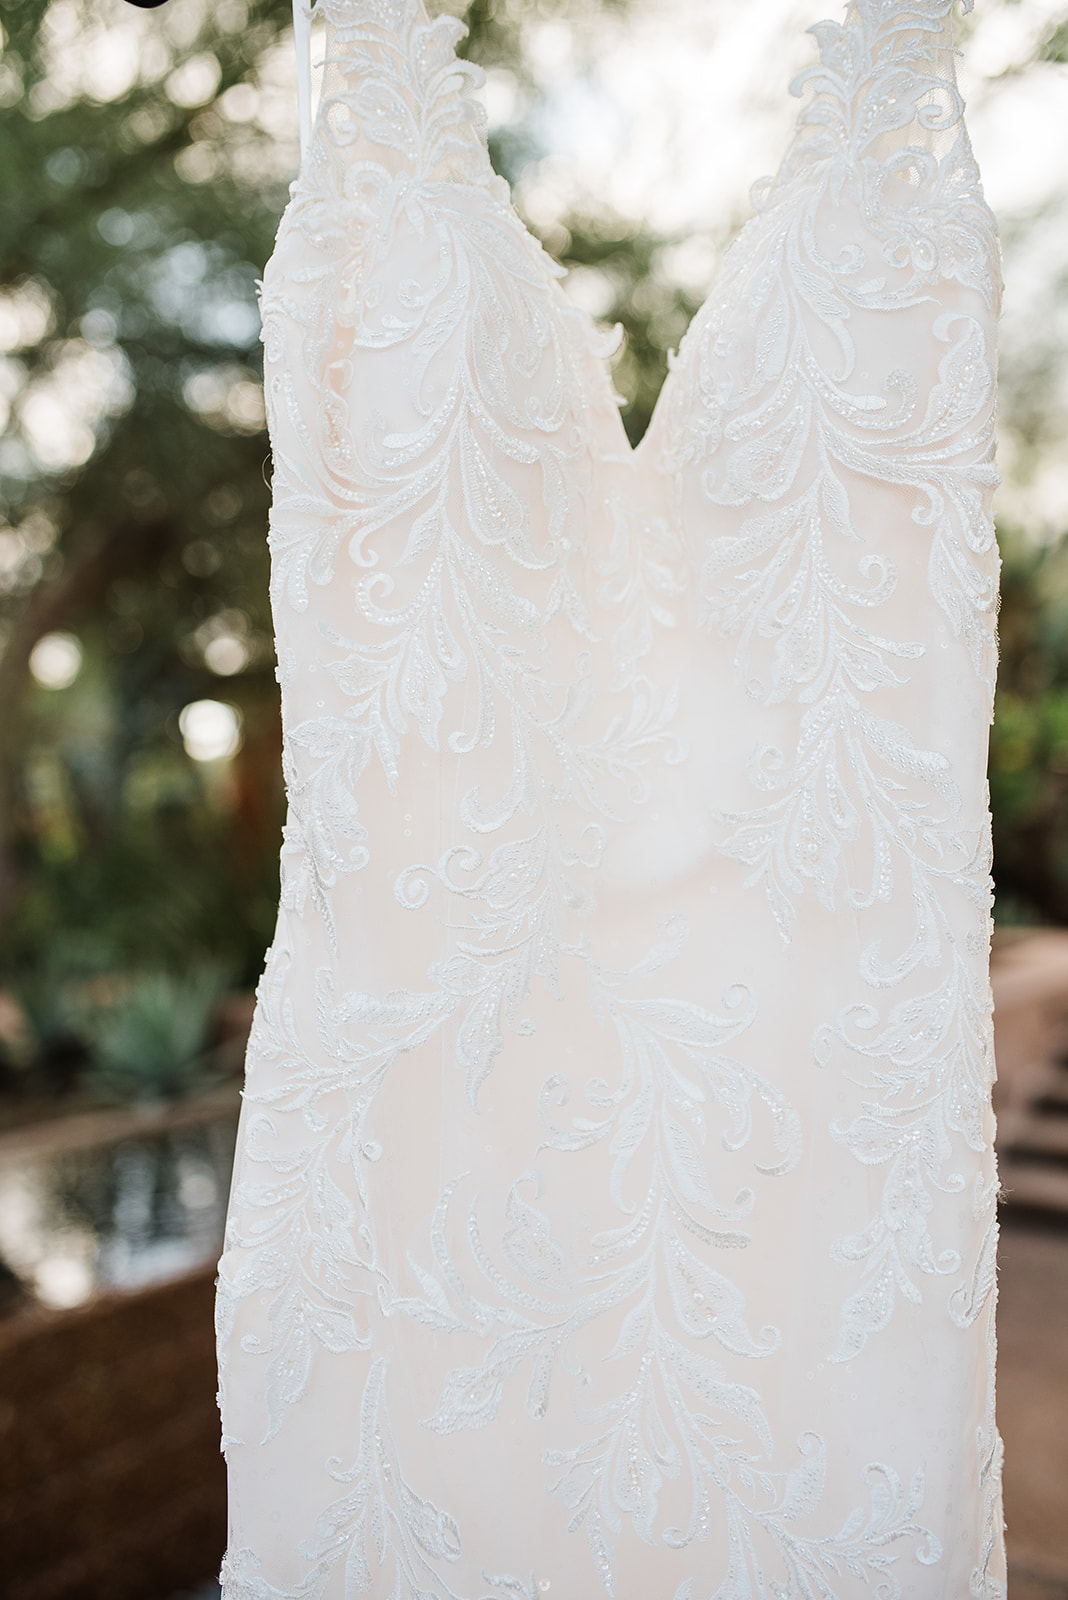 A white lace wedding dress hangs in a garden at Bella Rose Estate Wedding